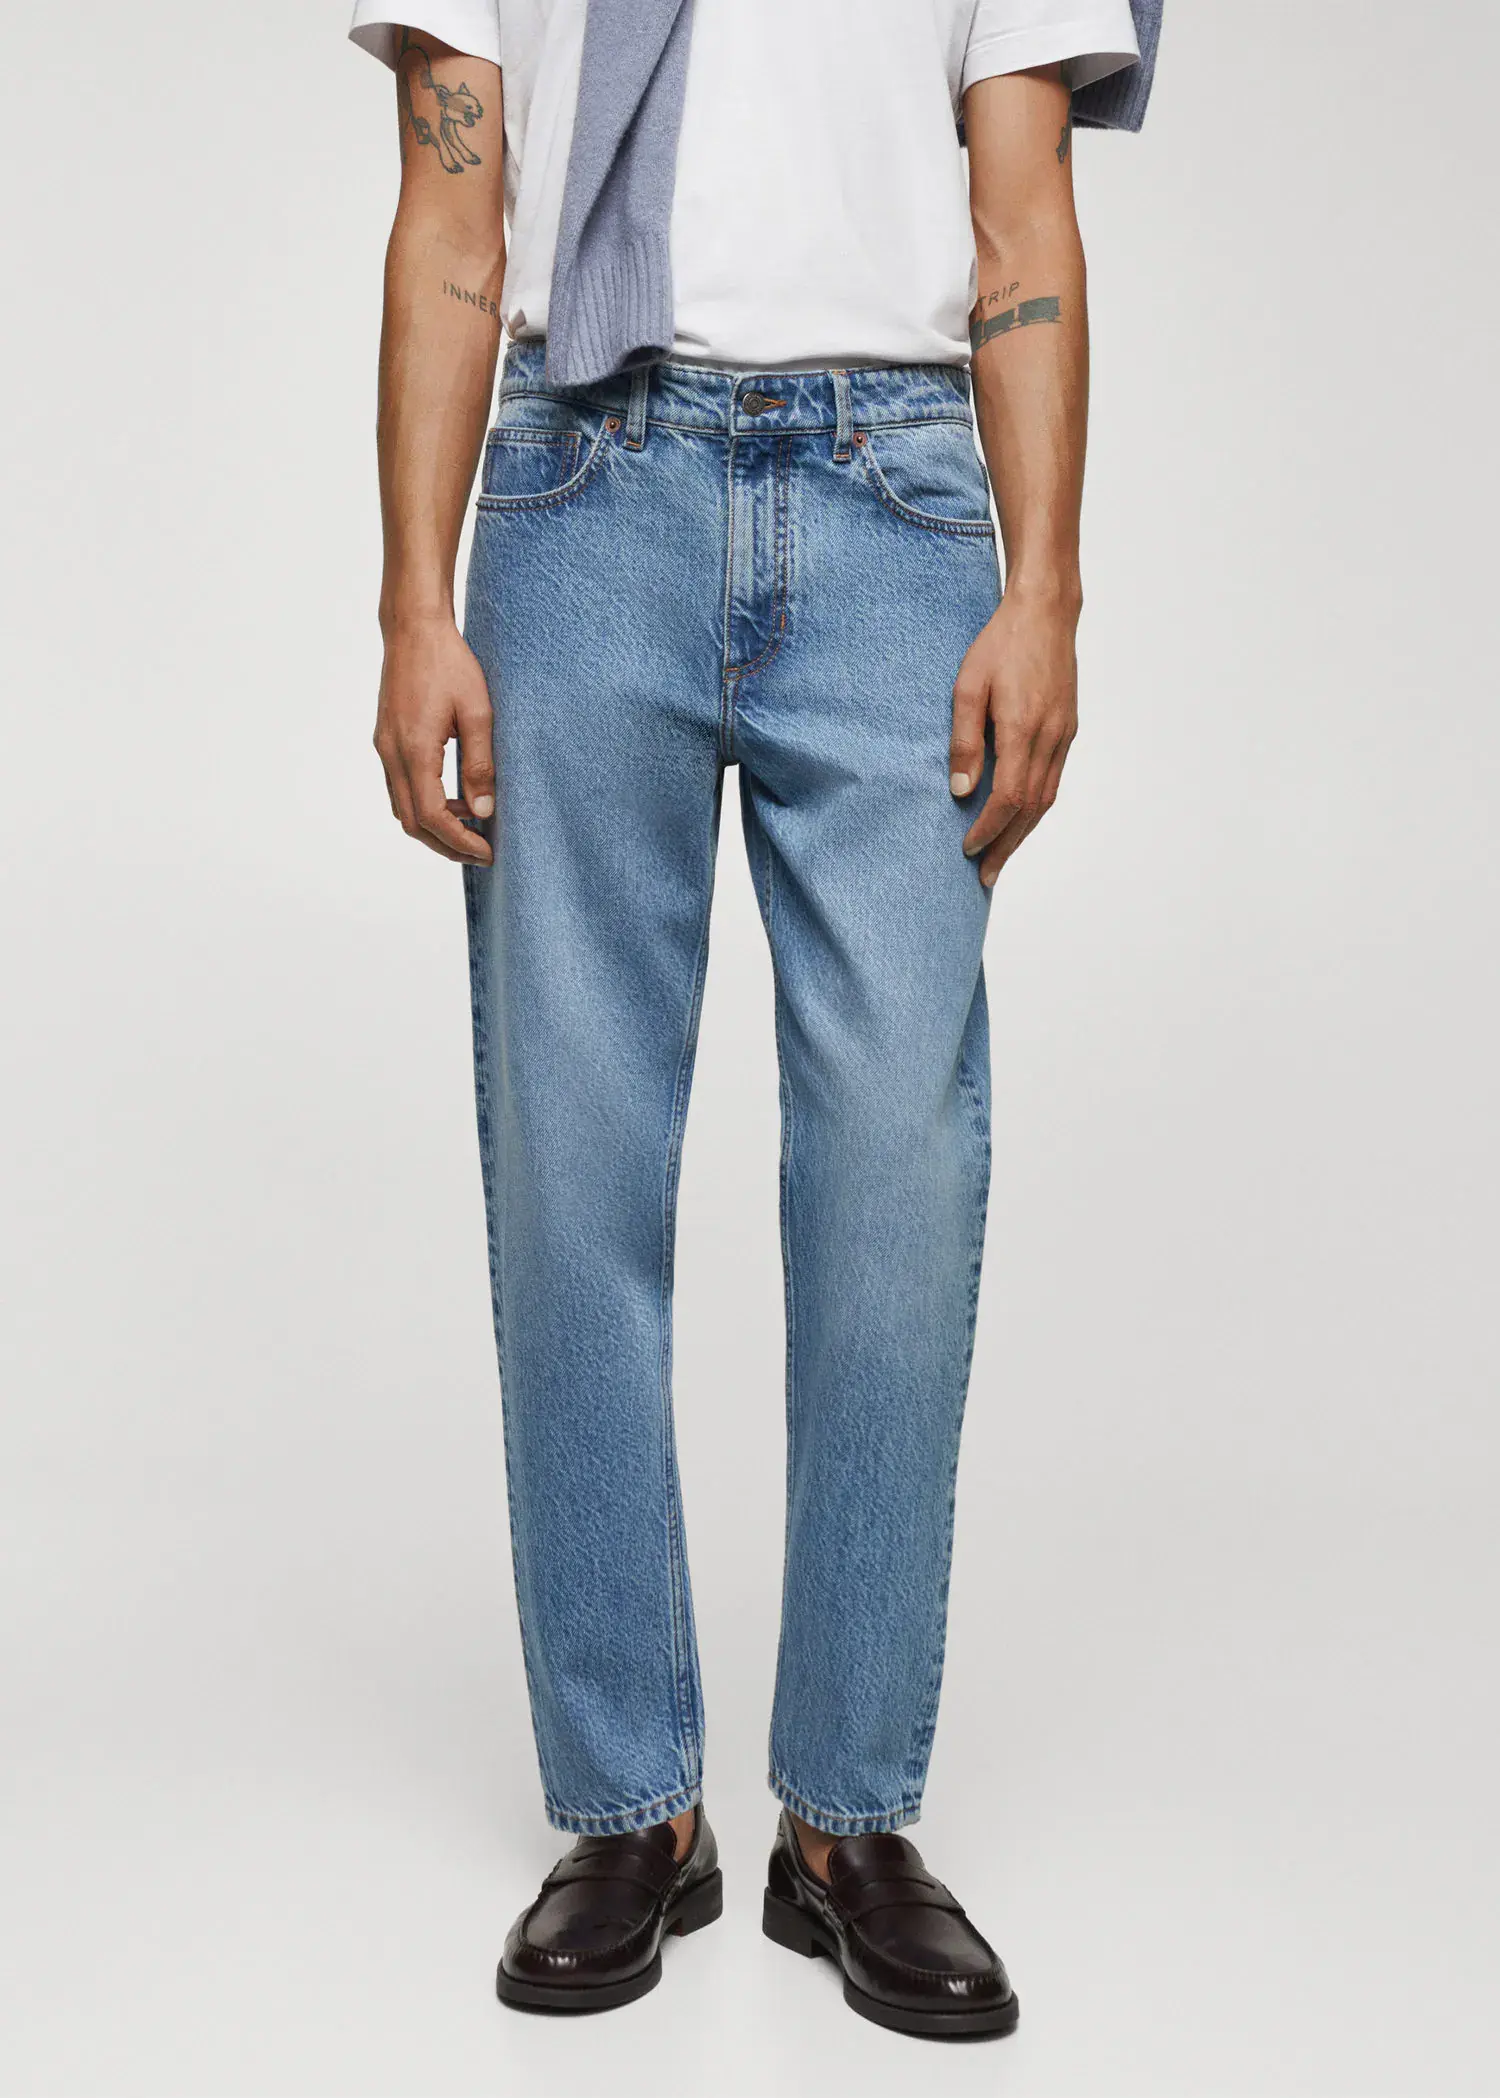 Mango Sam tapper fit jeans. 2